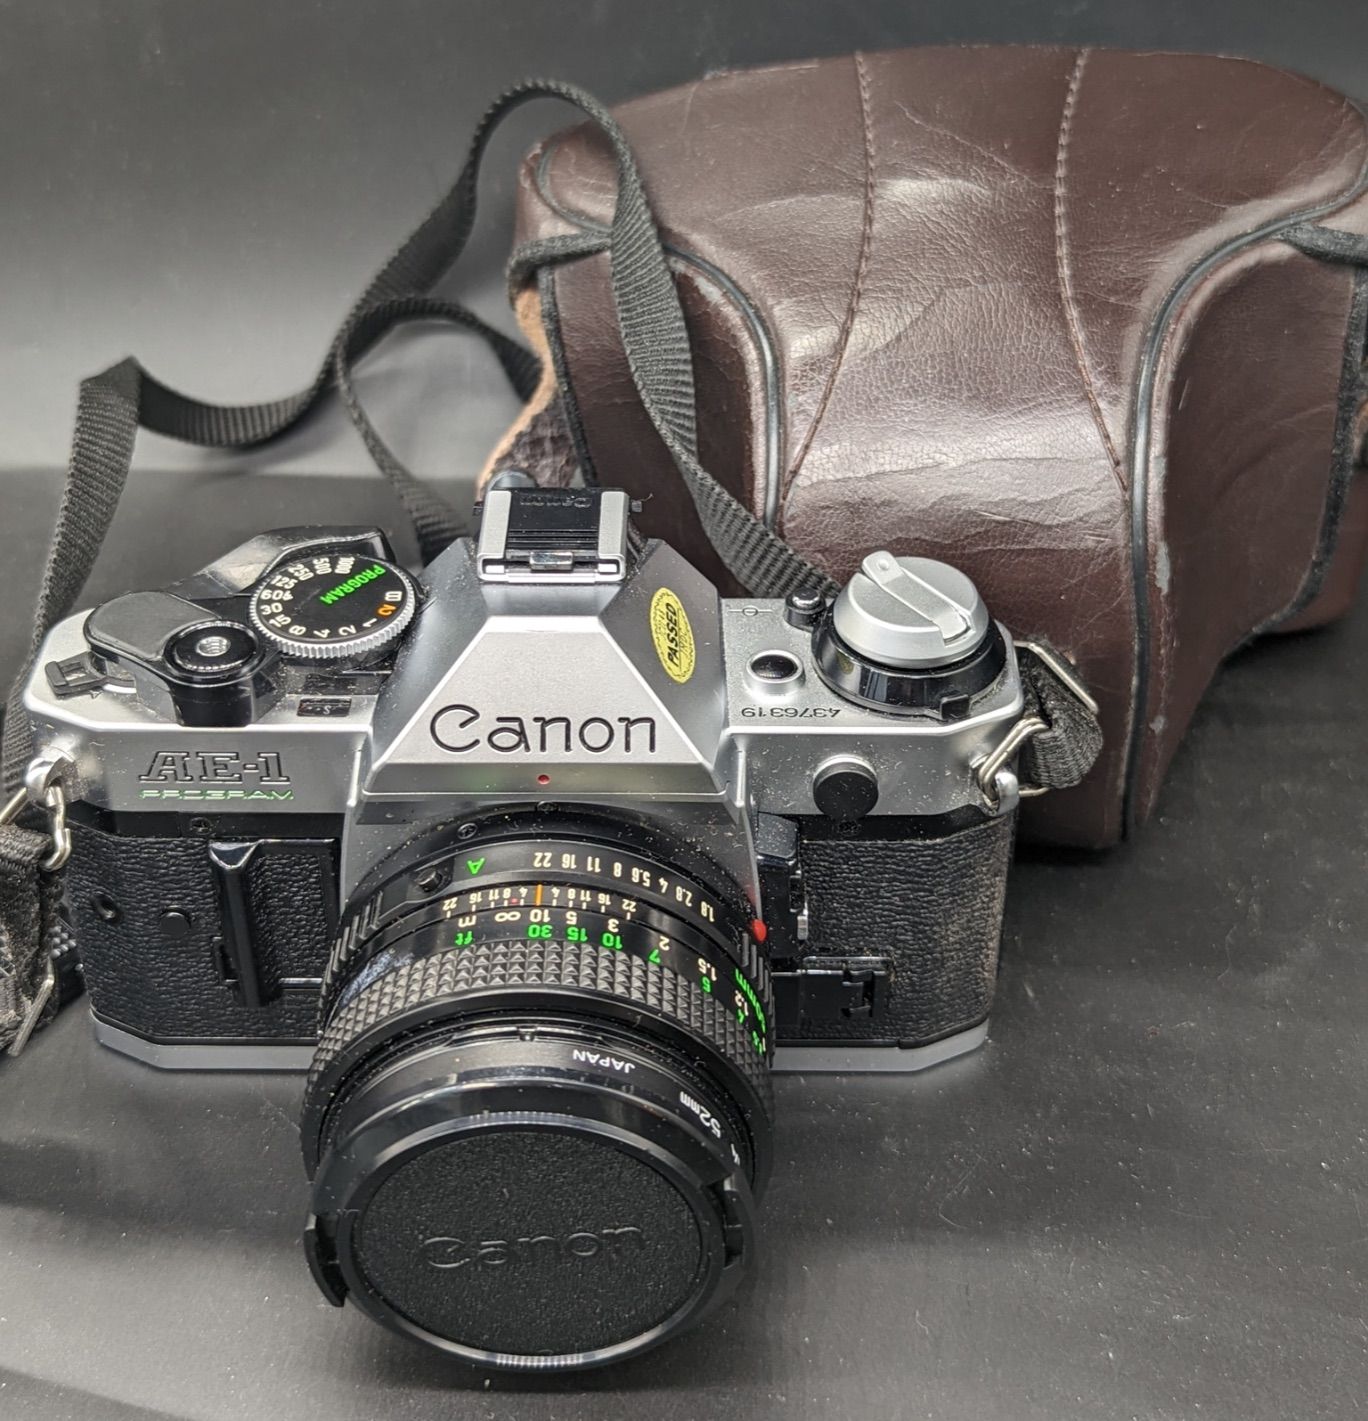 CANON A Canon AE-1 camera, 50mm lens